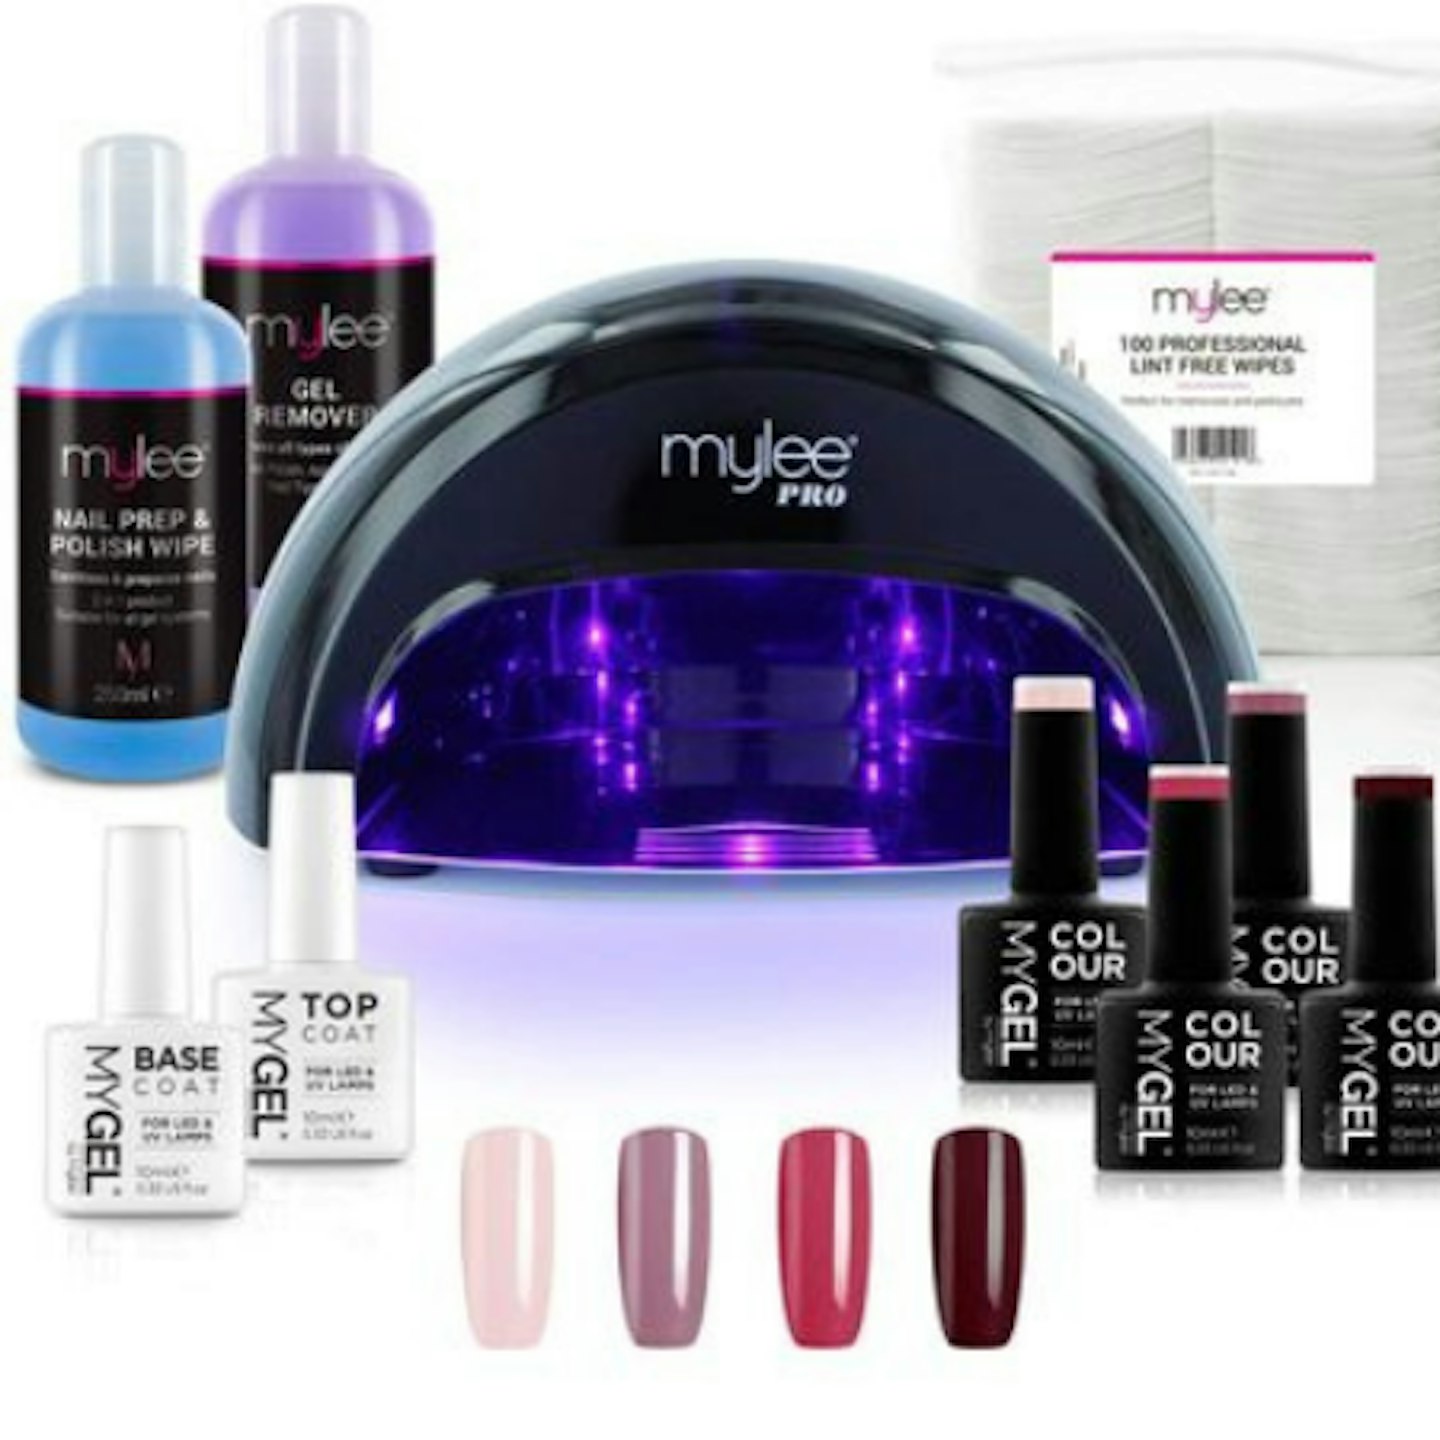 Mylee Complete Professional Gel Nail Polish LED Lamp Kit